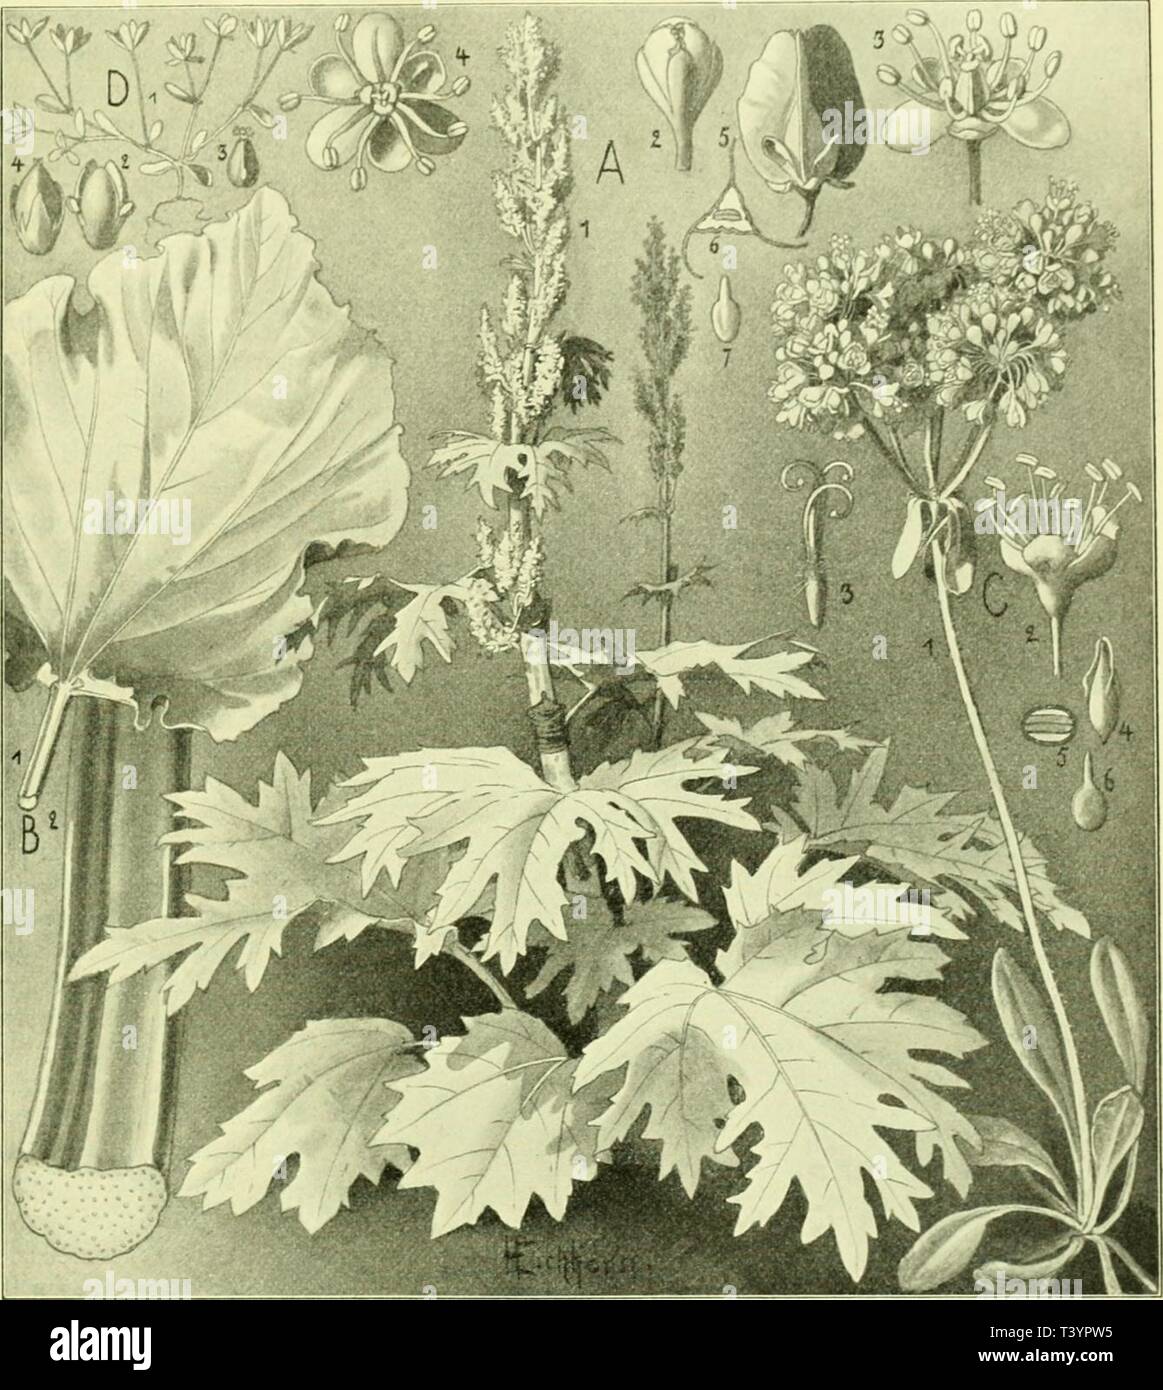 Archive image from page 632 of Die Pflanzenwelt (1913-1922). Die Pflanzenwelt  diepflanzenwelt01warb Year: 1913-1922.  antcnpflansen: mcMattlemc}: (Shtöterigeirädi'e). 535 ®cr größte Seit iie $Rf)a6at6crl be§ anbel§ [tammt bon tuilben flanjen, bocf) triib in Xibet bie «Pflanje in einzelnen öegcnben aucf) luUioiett: jelbft in 2)eutl(Ianb f)at man öerfurfjsipcii'e 9?abarber tuüioiert, ber eine beni ccfjtcn an öüte tautu narf)i'tef)enbe Xroge geliefert (jat.    9(66. 178: 3tf;a6at6er (Rheum), Sßjollantpfet (Eriogonum» unb Soenigie (Koenigia). DcrgrößCtt; 6) ruct im I C)Eriogonnm umbellatum: 1) I  Stock Photo